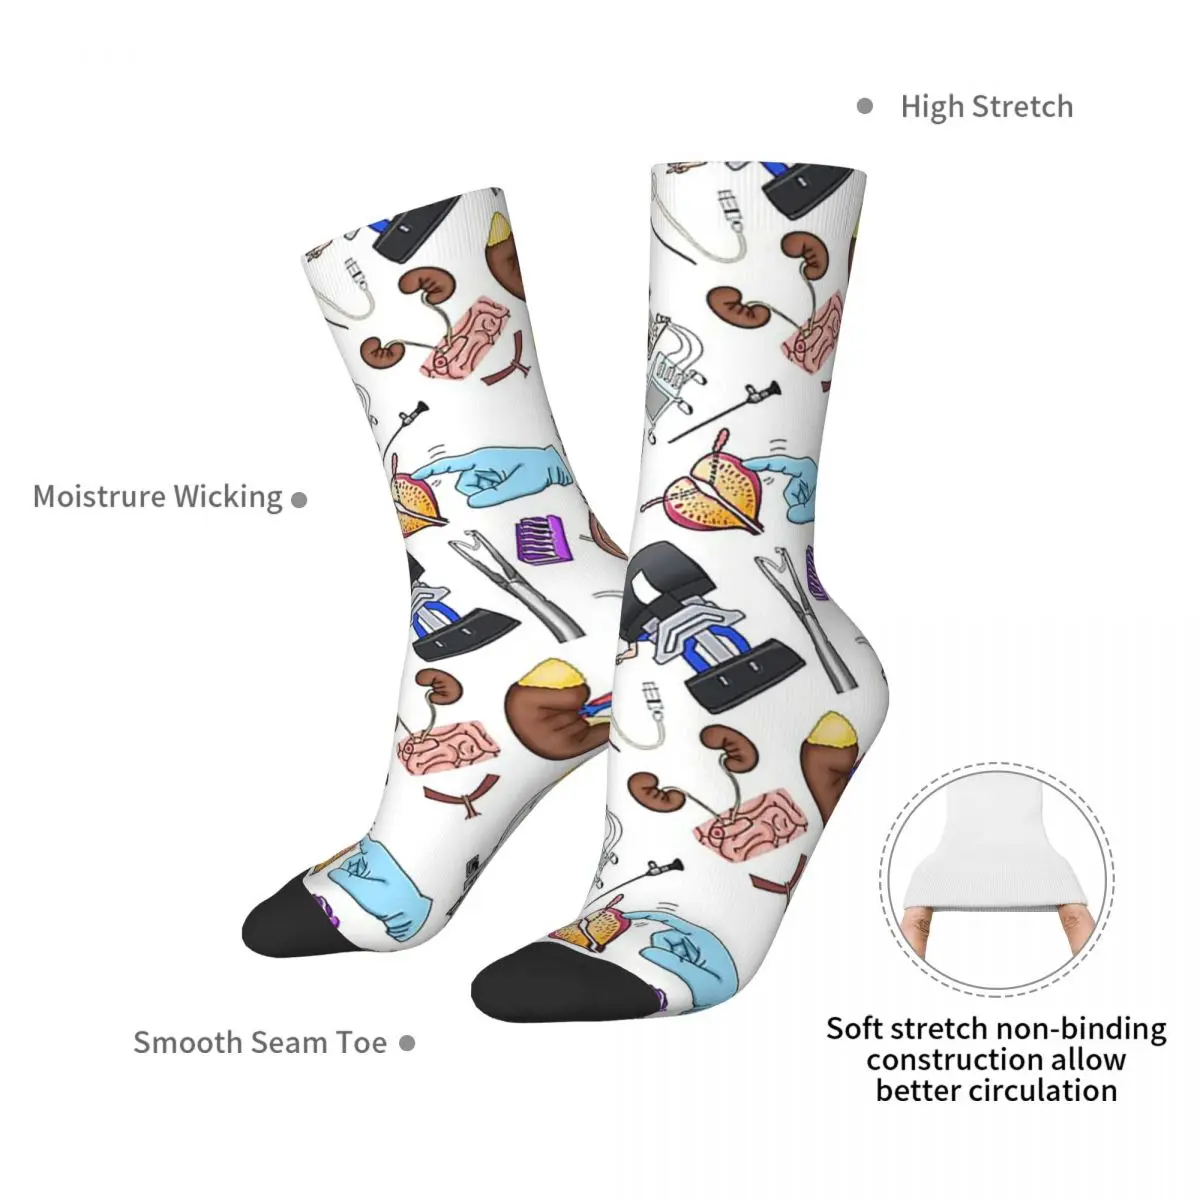 Calzini per urologia Harajuku calze assorbenti per il sudore calze lunghe per tutte le stagioni accessori per regali Unisex